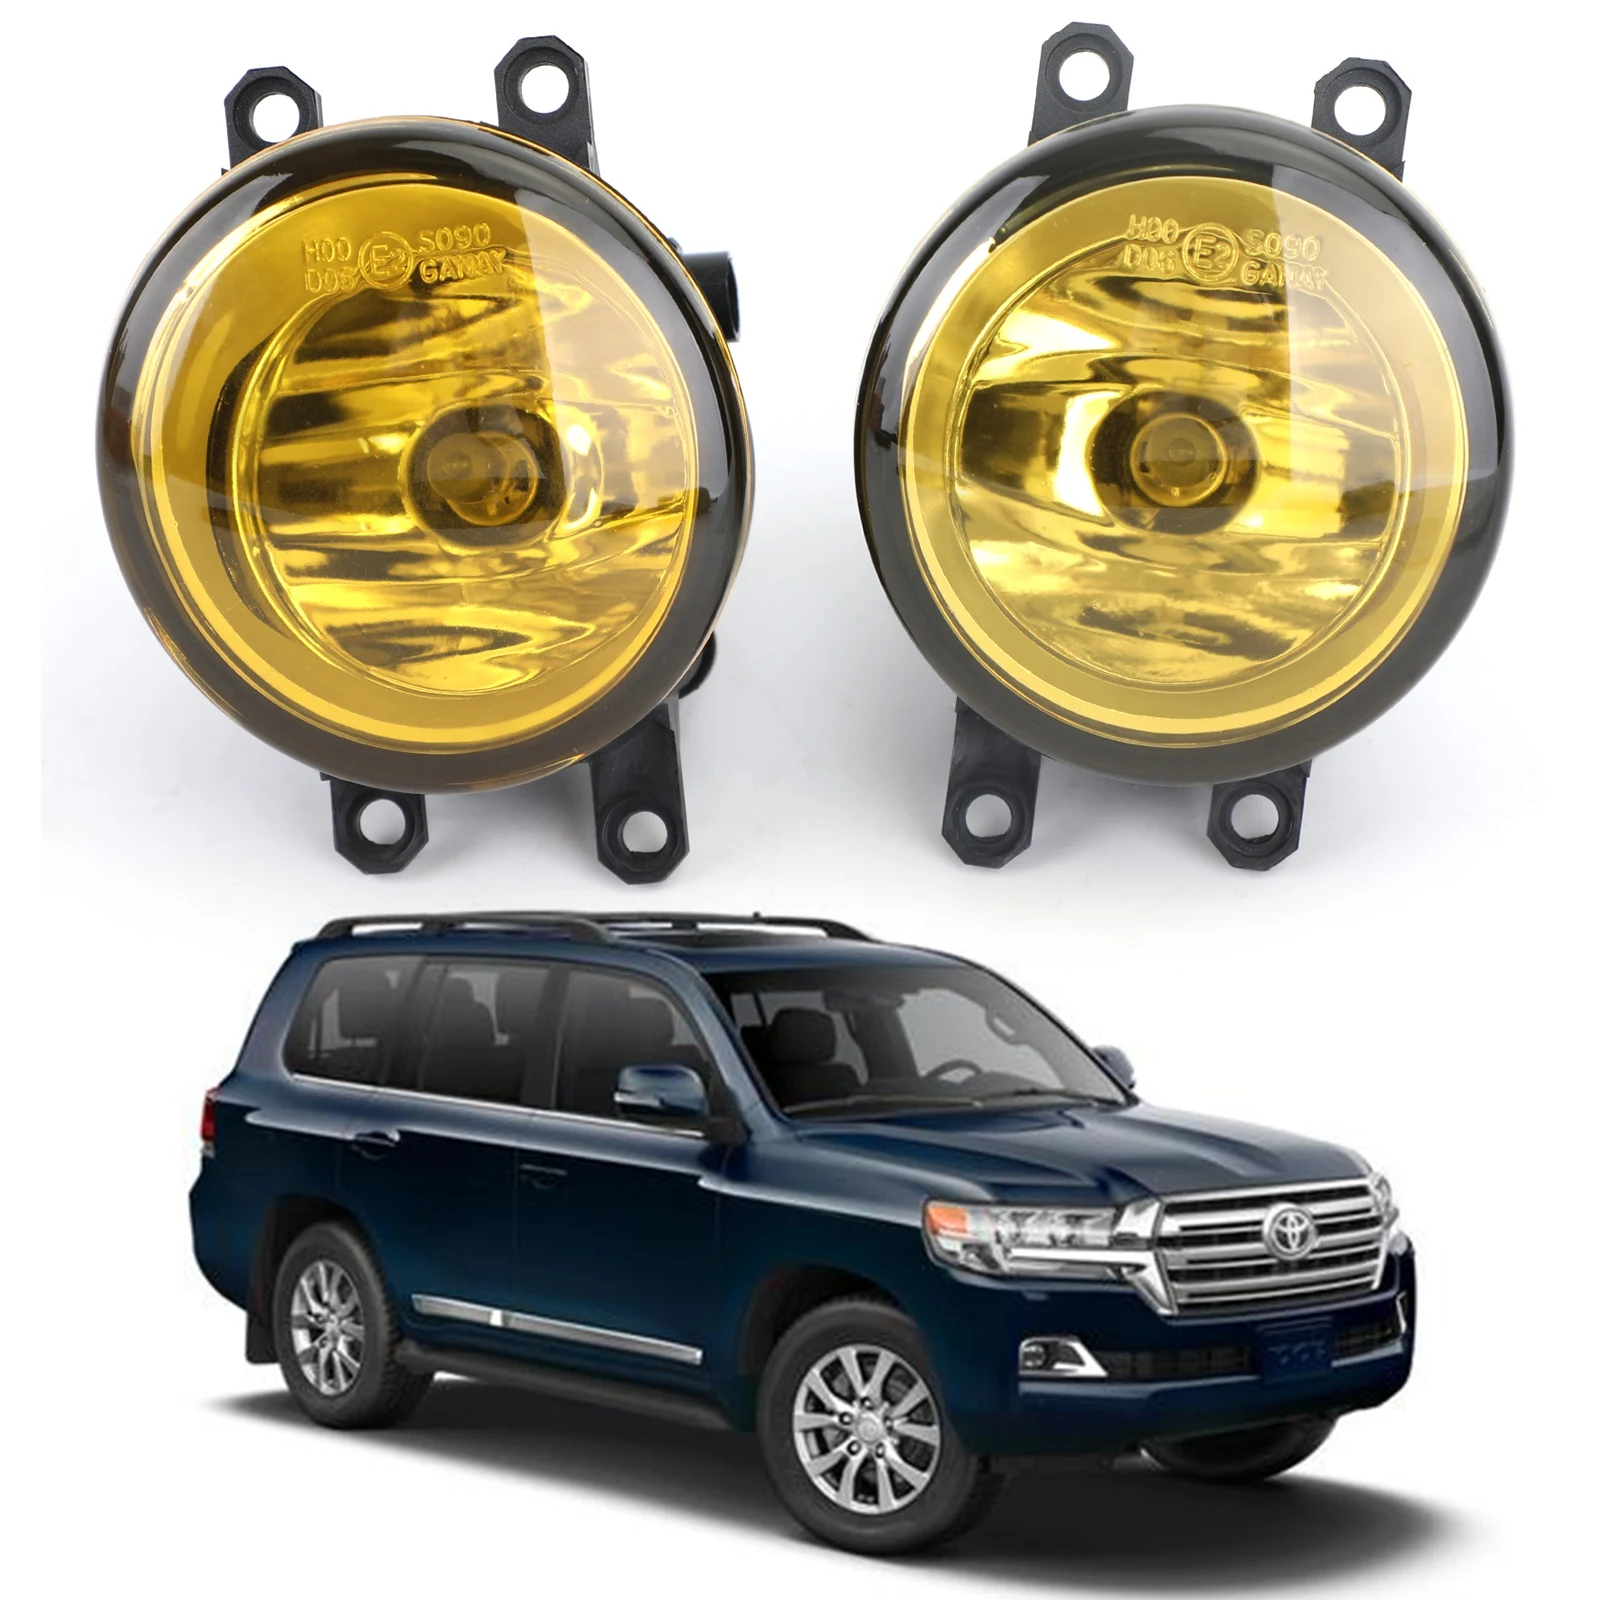 

Areyourshop 2PCS Yellow Upgrade LED Front Fog Lamp Light For Toyota RAV4 Camry Corolla For Lexus